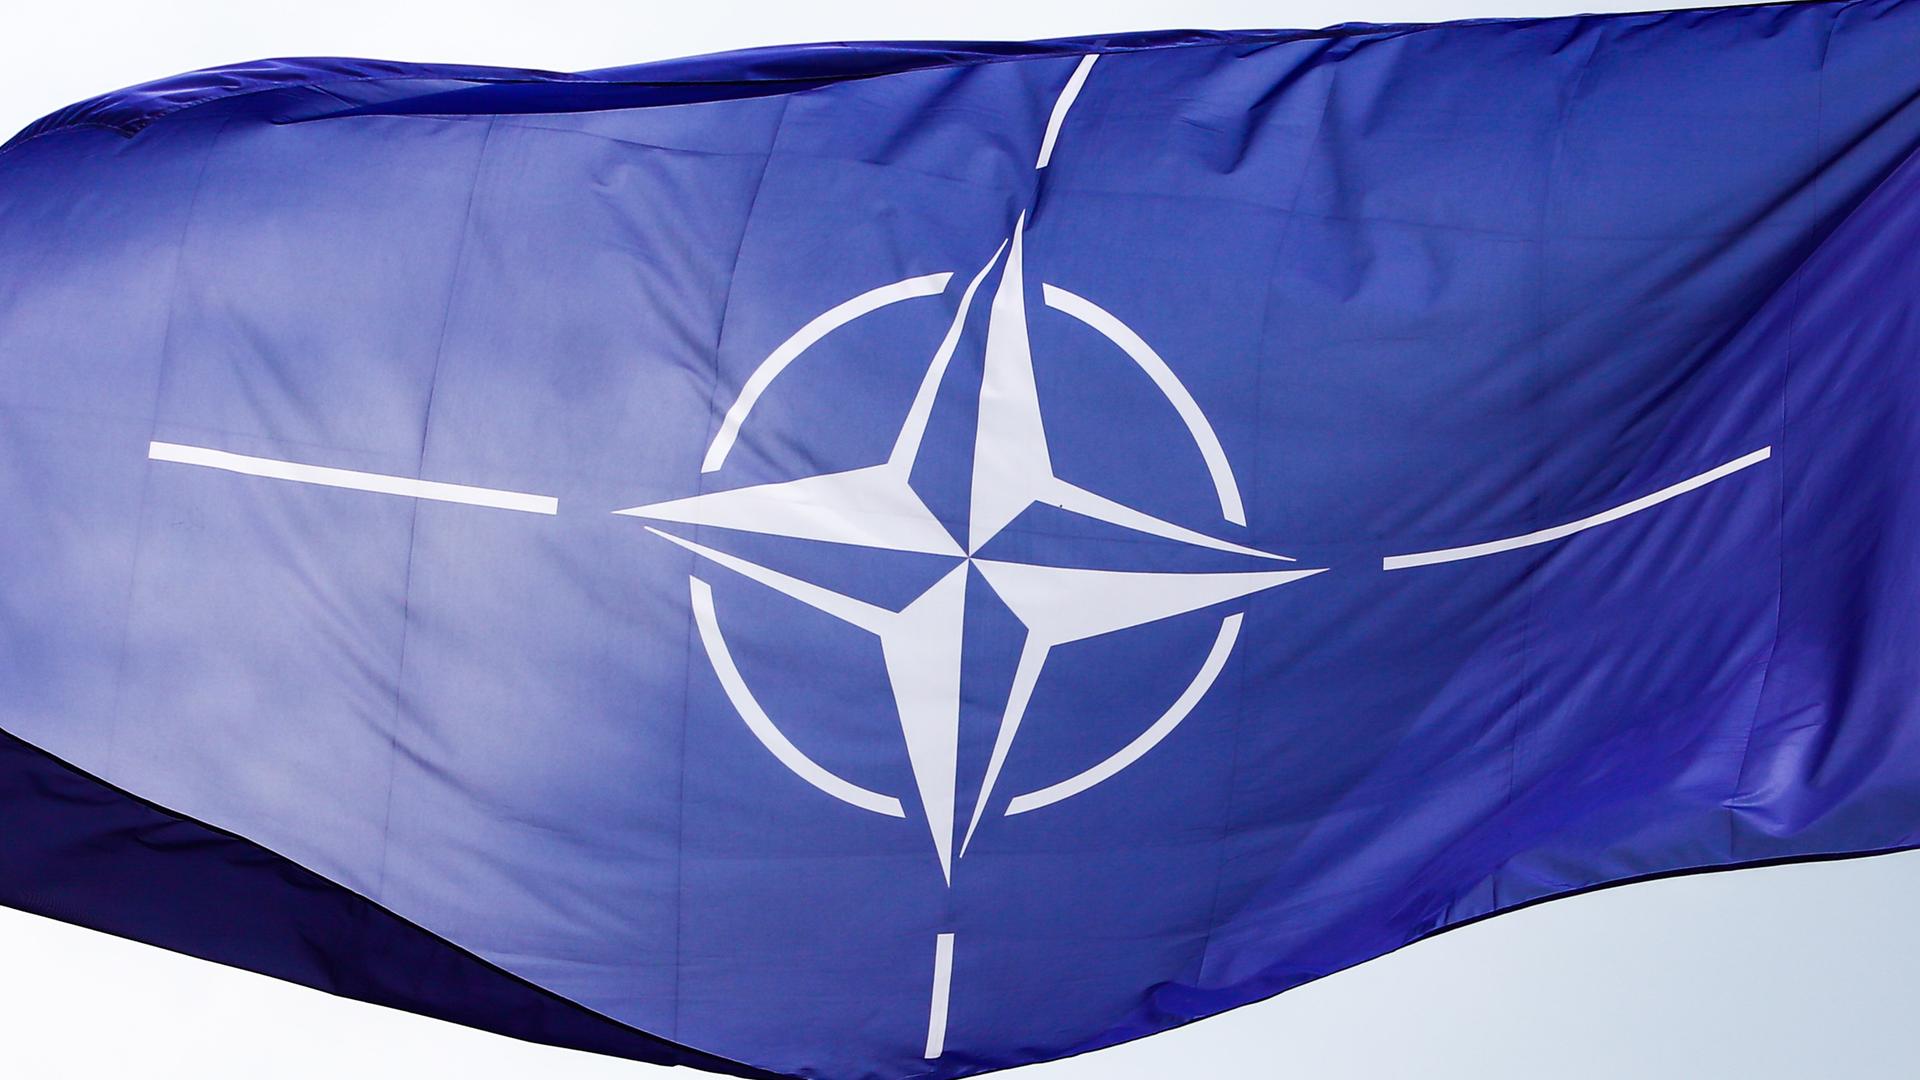 Die NATO-Flagge